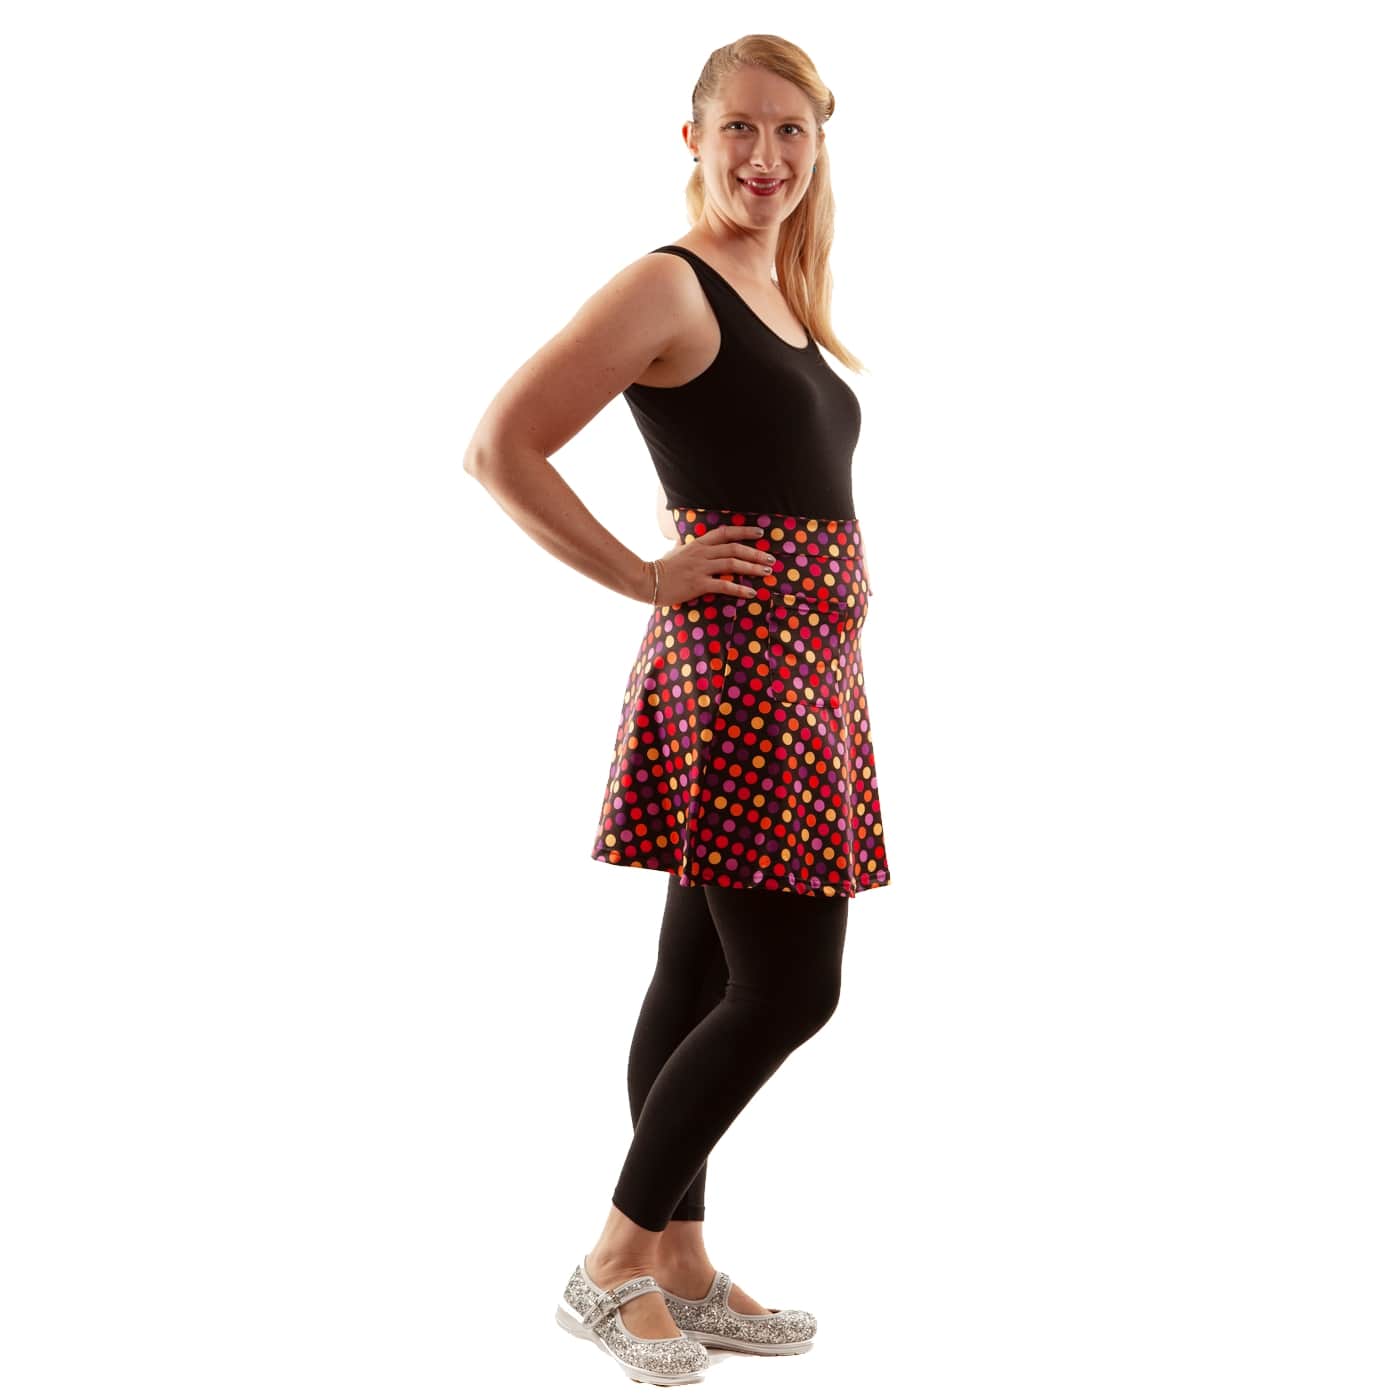 Pastel Confetti Short Skirt by RainbowsAndFairies.com (Pastel Polka Dots - Spots - Stripes - Skirt With Pockets - Aline Skirt - Cute Flirty - Vintage Inspired) - SKU: CL_SHORT_CONFT_PAS - Pic 04